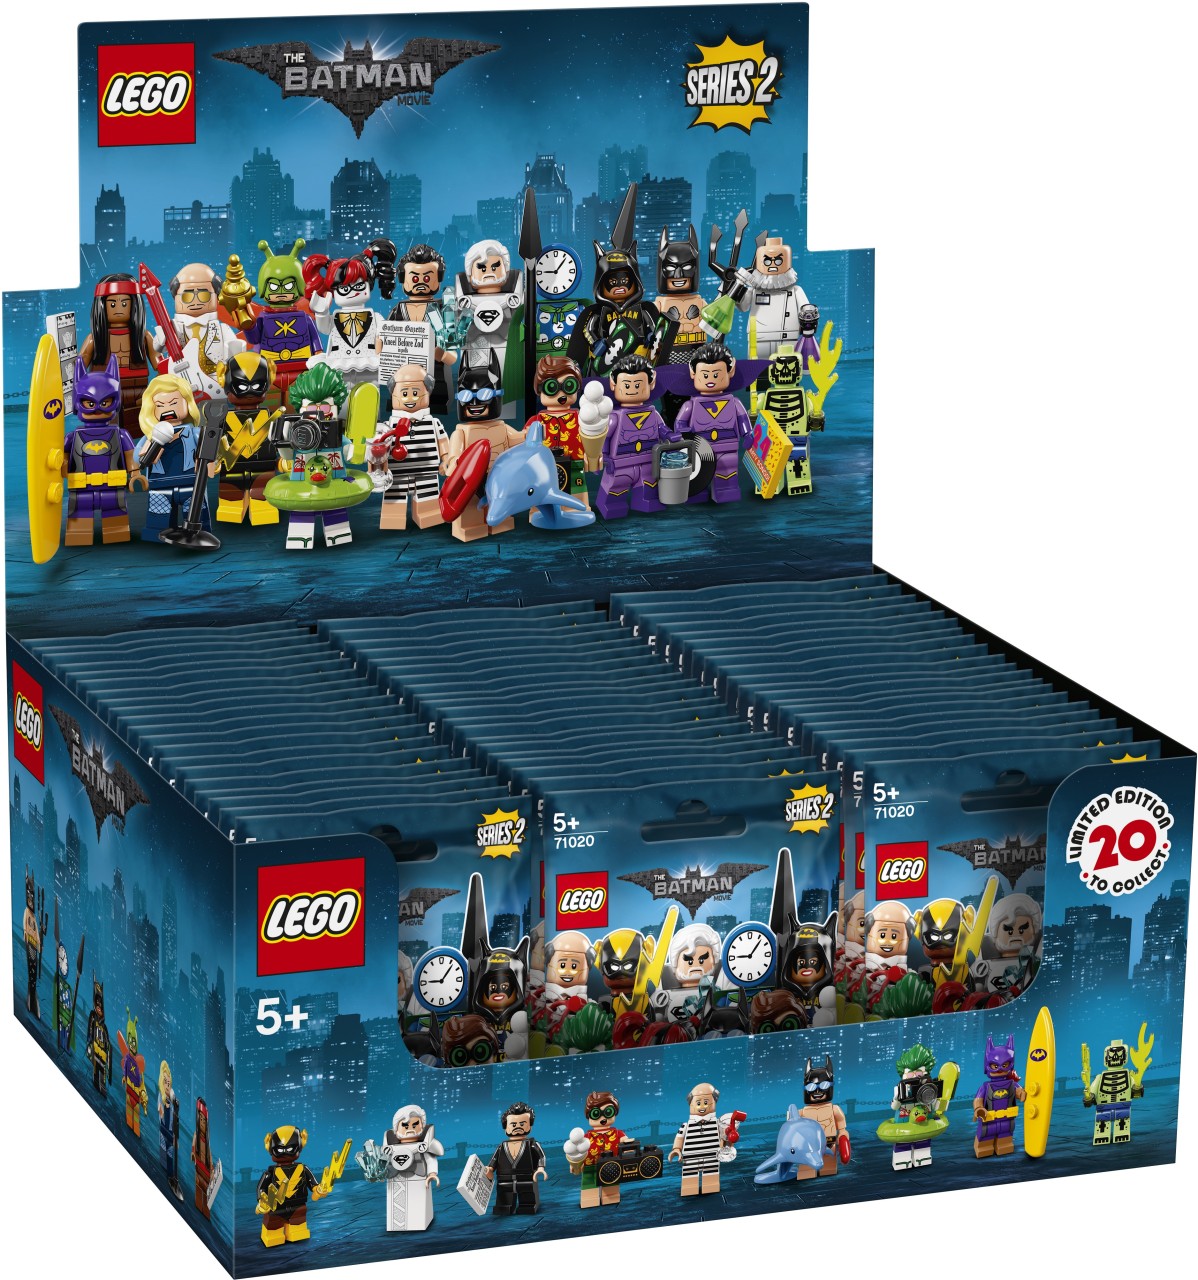 Brickfinder - The LEGO Batman Movie CMF Series 2 Character List!